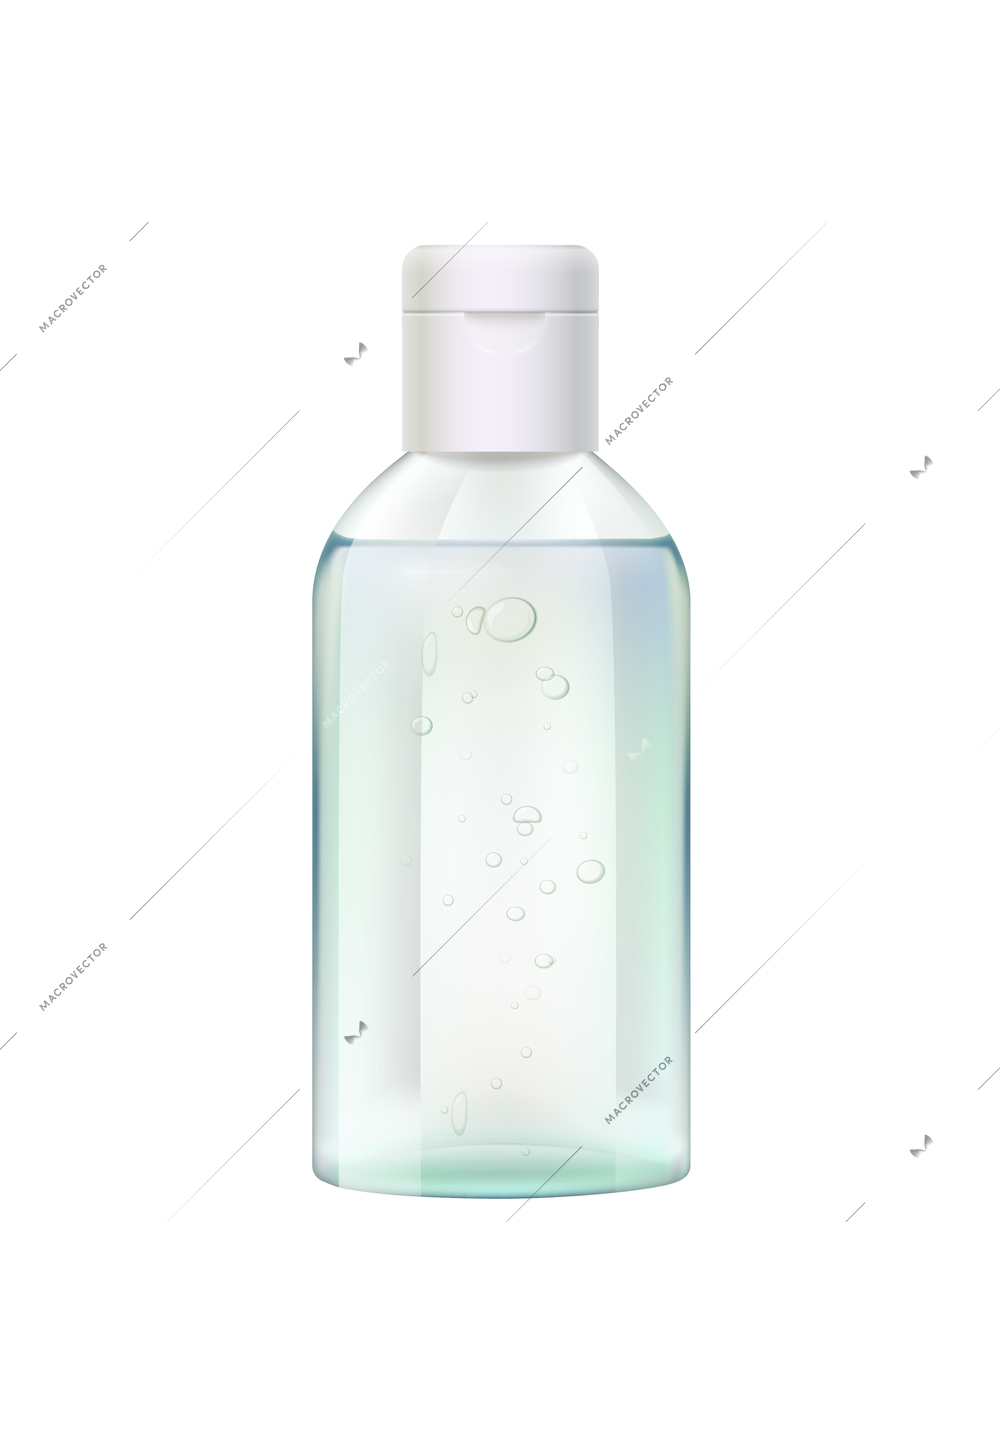 Hand sanitizer composition with realistic image of antivirus aerosol dispenser spray bottle vector illustration